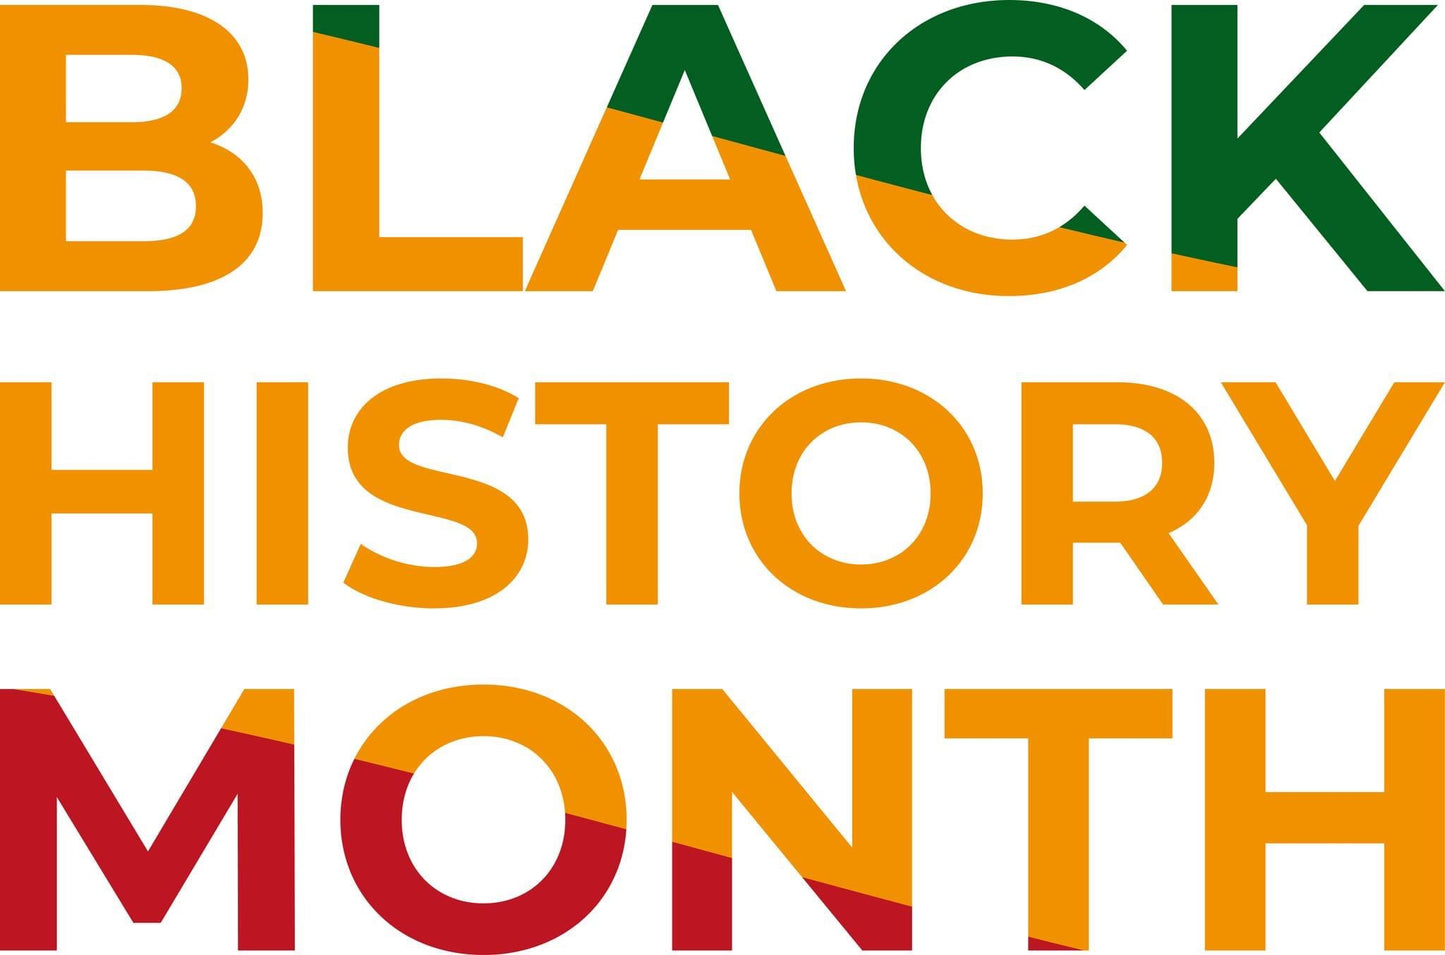 Black History Month T-Shirts